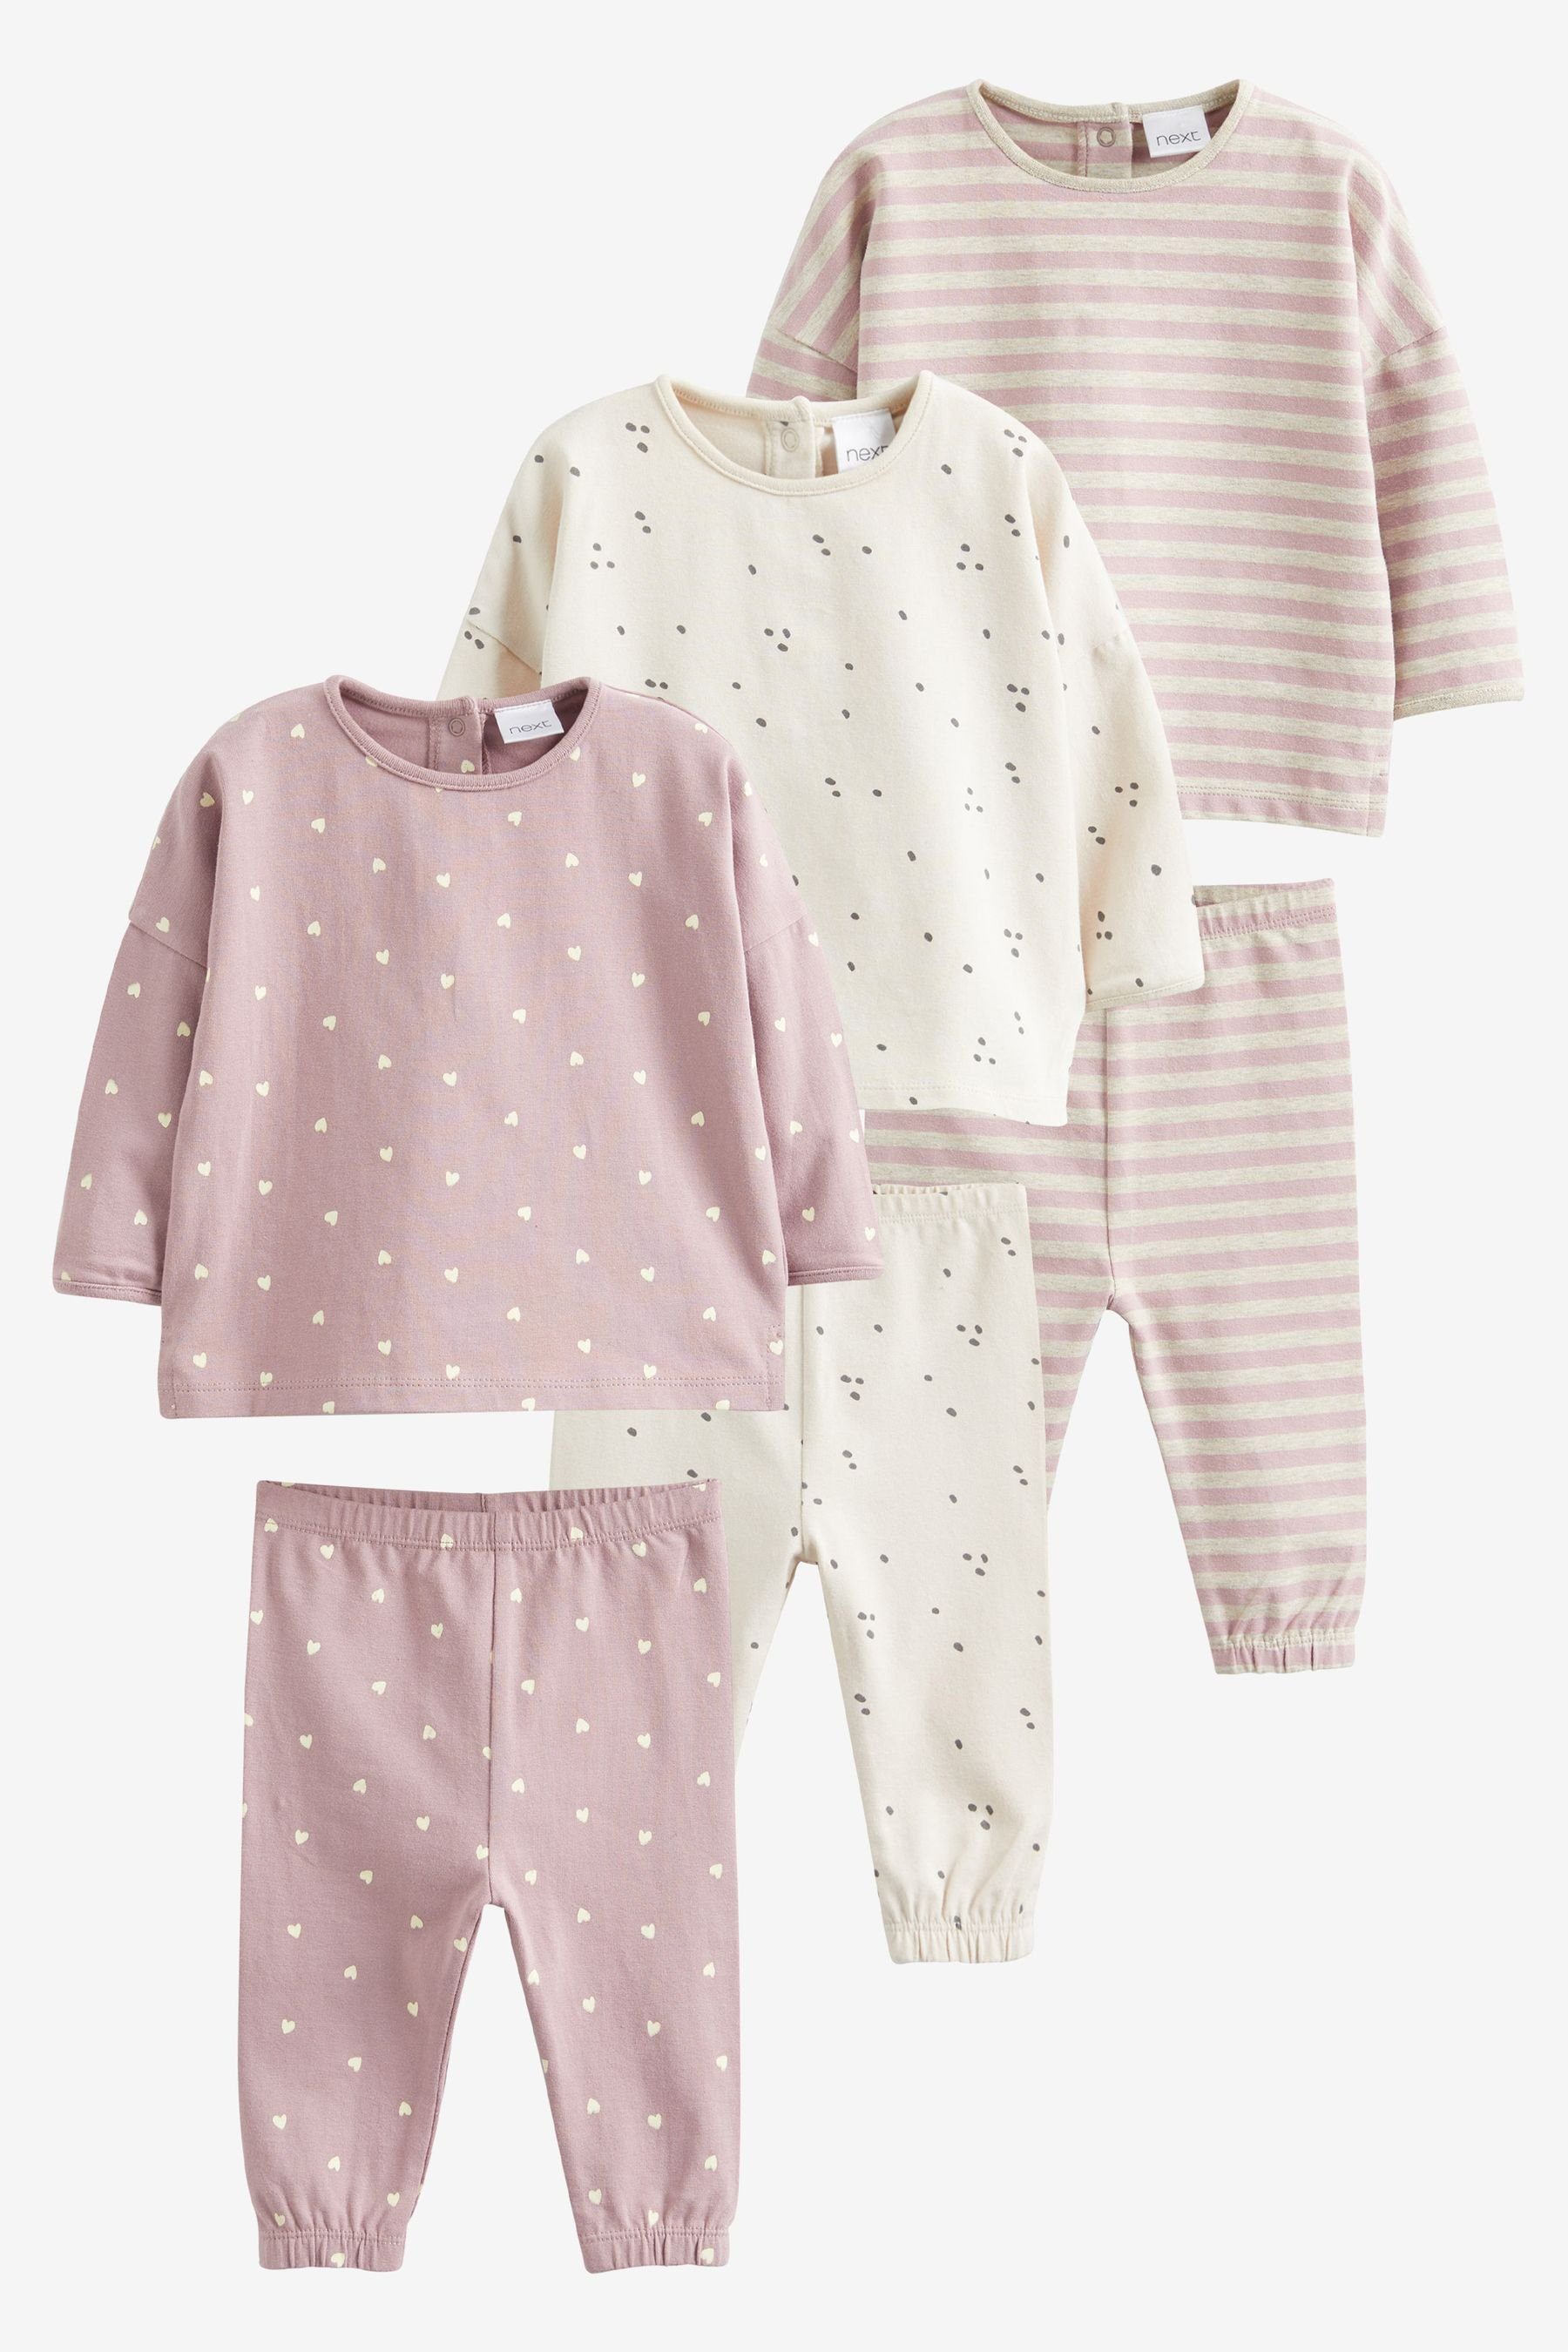 Next Shirt Leggings & Pink (6-tlg) 6-teiligen und T-Shirts Baby-Set im Stripe Leggings